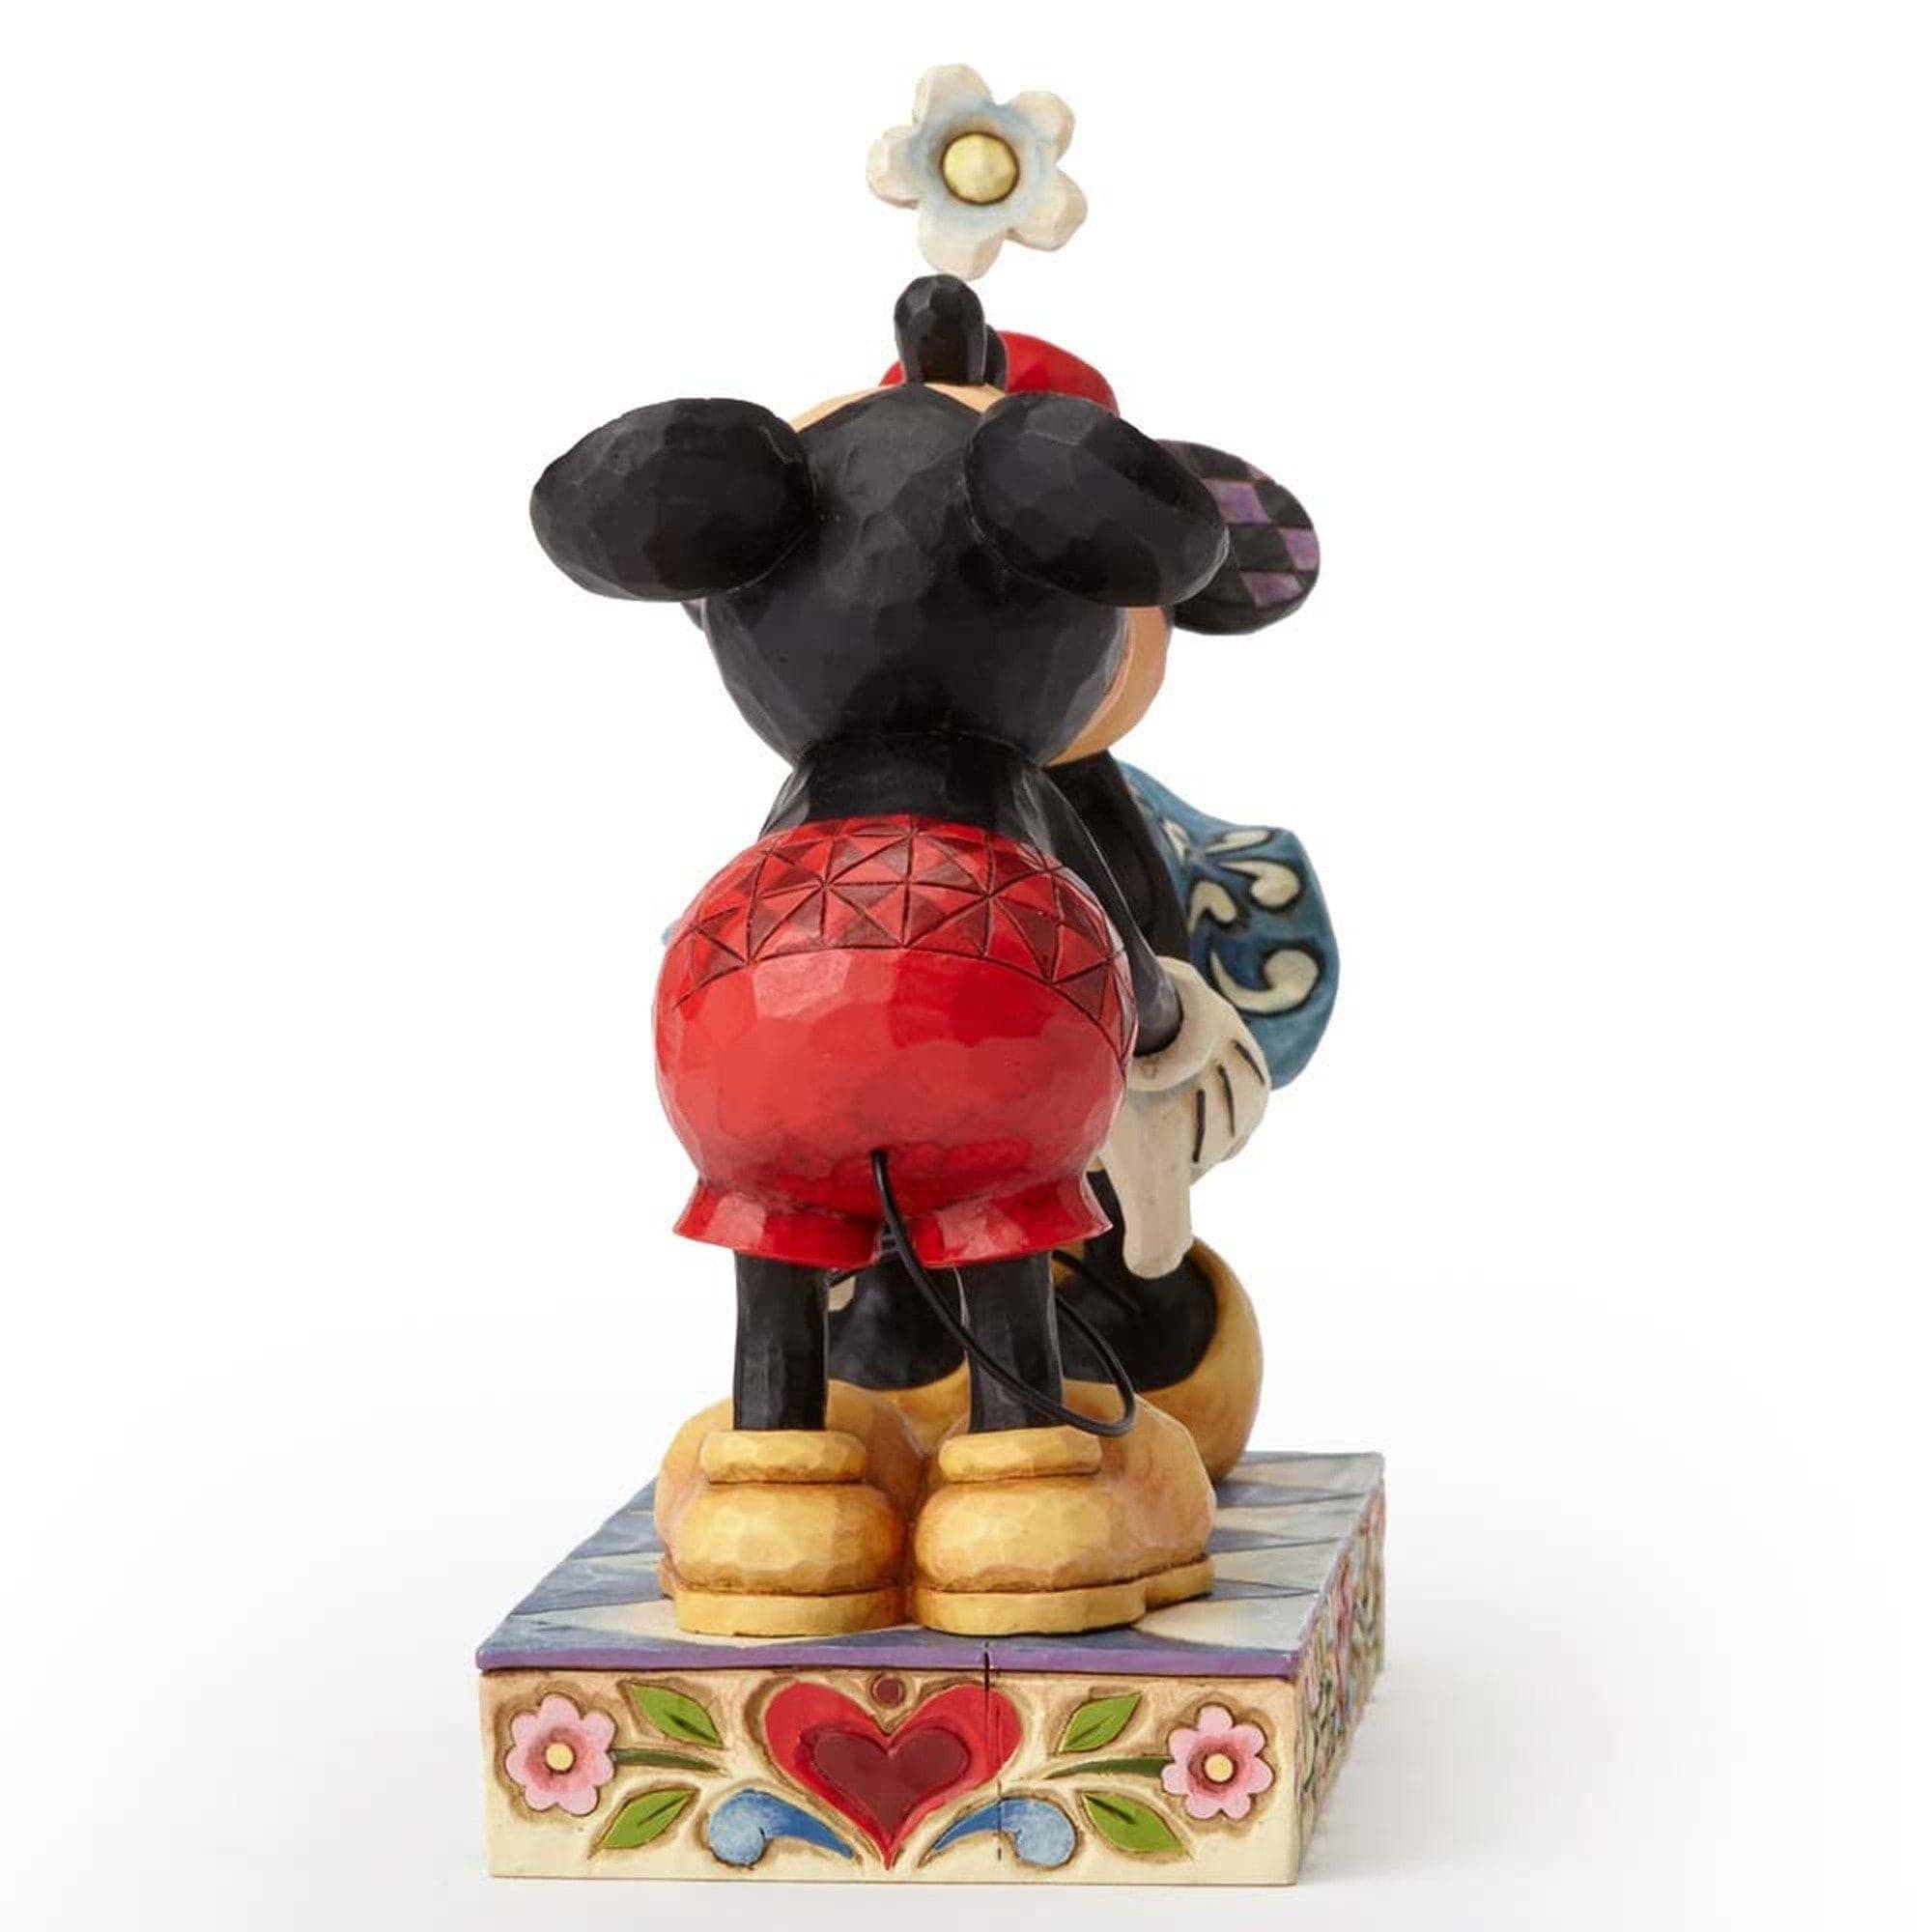 Enesco Disney Ornament Disney Traditions Figurine - Smooch For My Sweetie - Mickey & Minnie Figurine